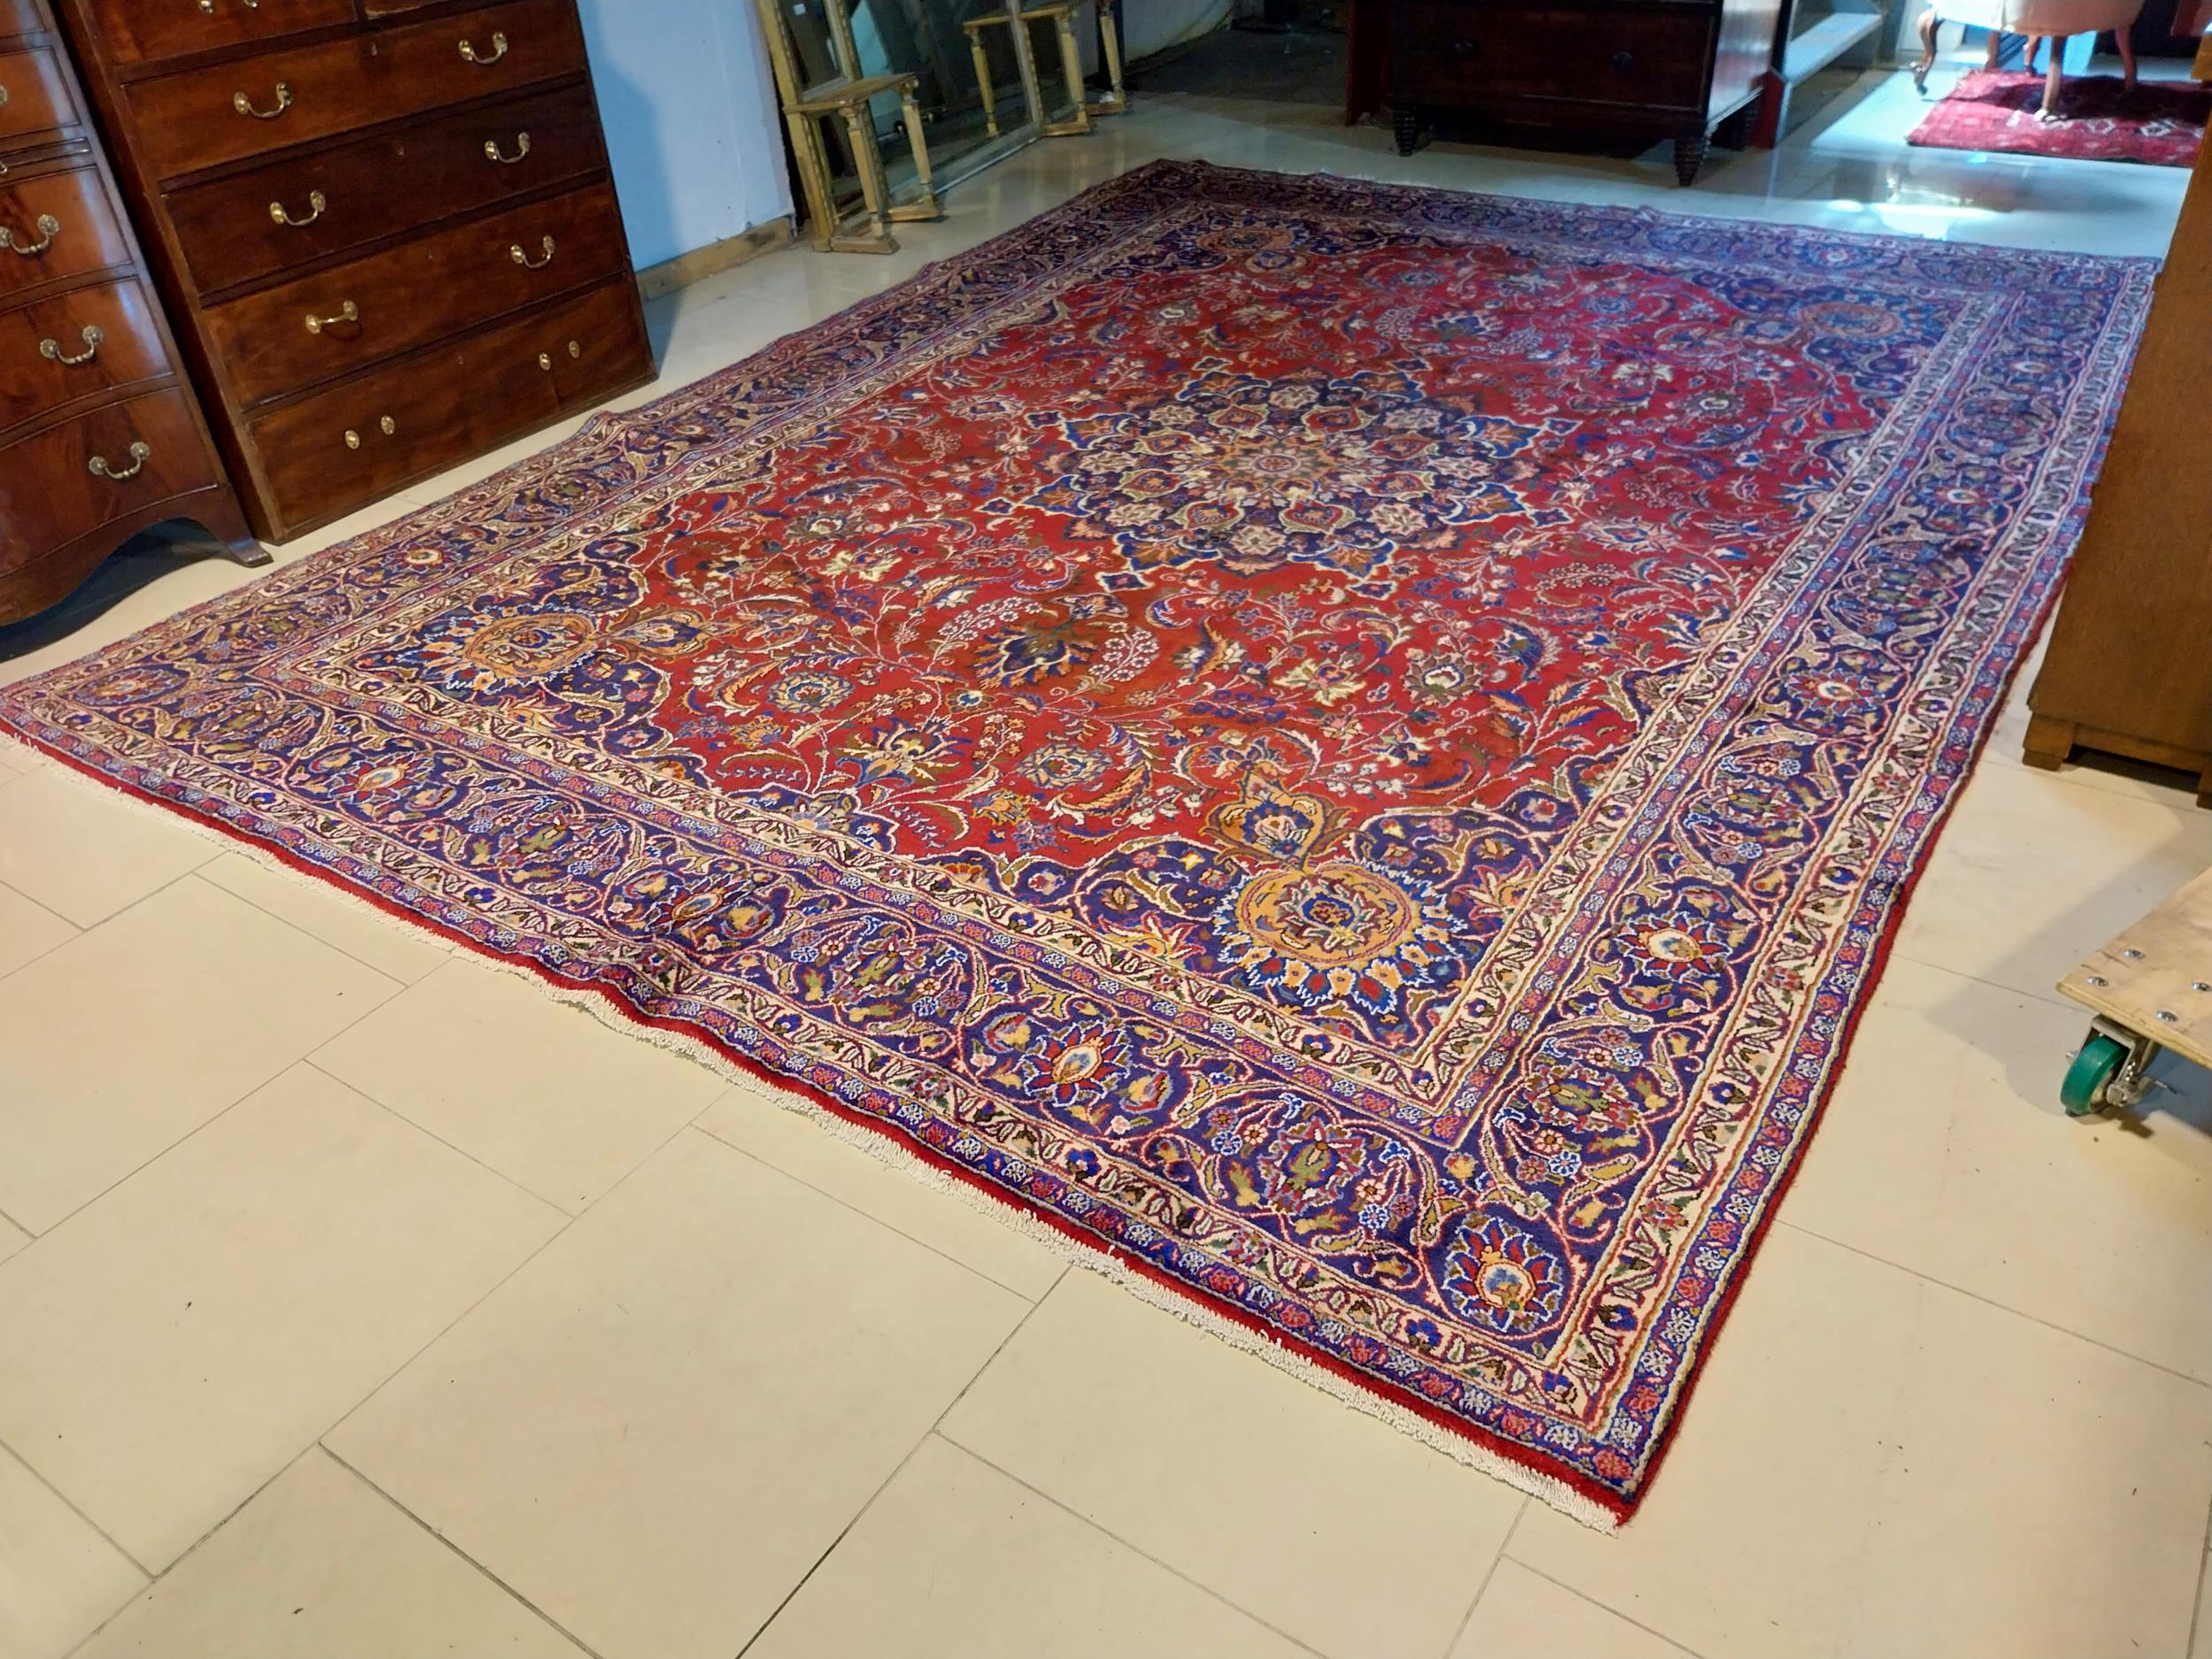 Decorative Persian carpet square {394cm L x 290cm W} - Image 2 of 4